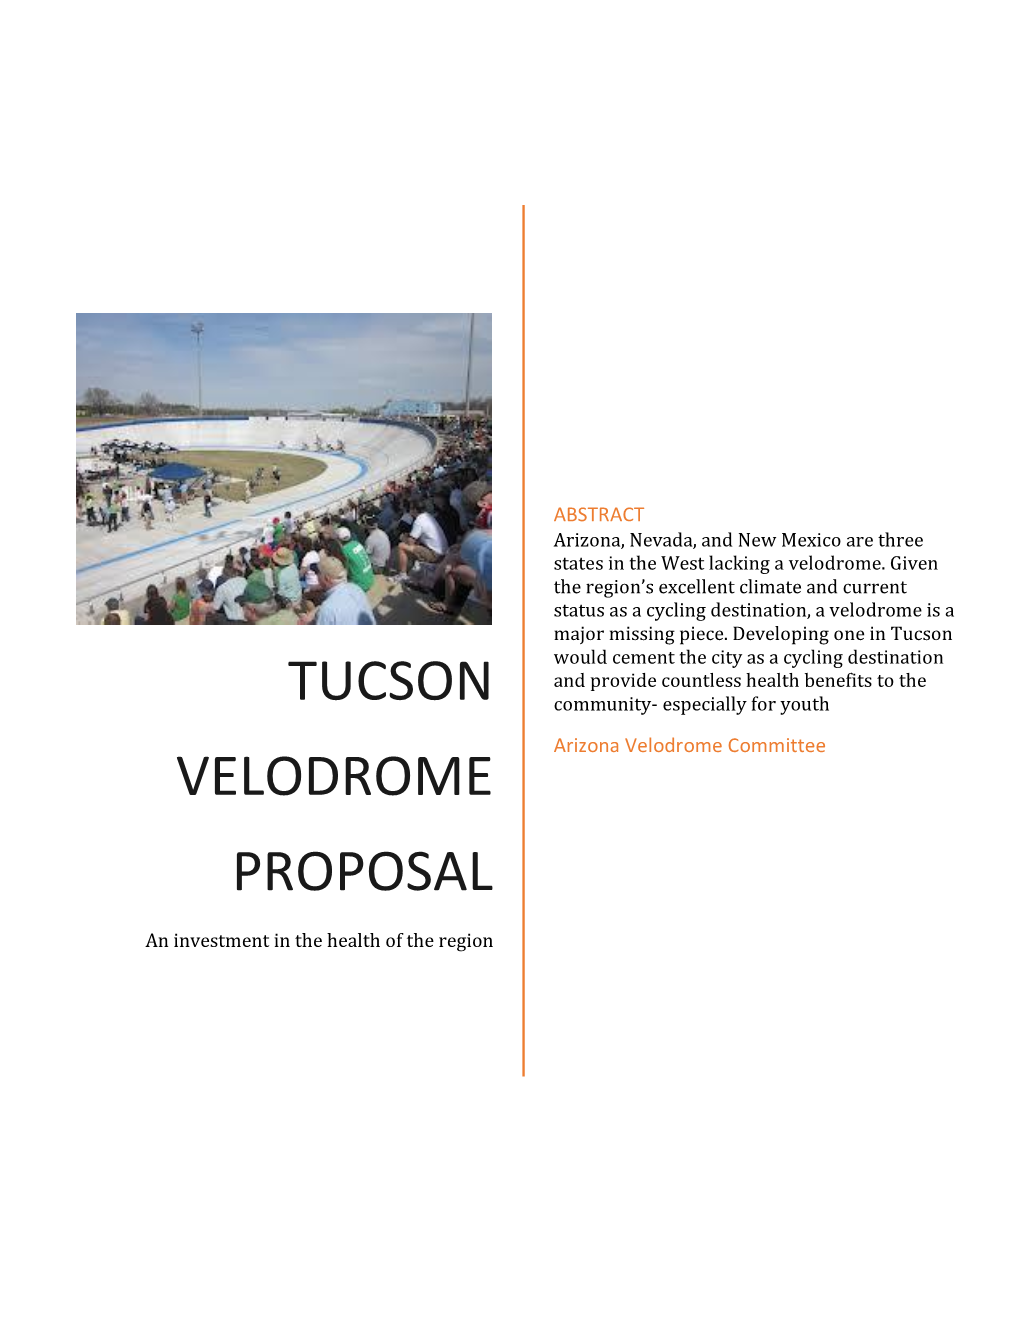 Tucson Velodrome Proposal